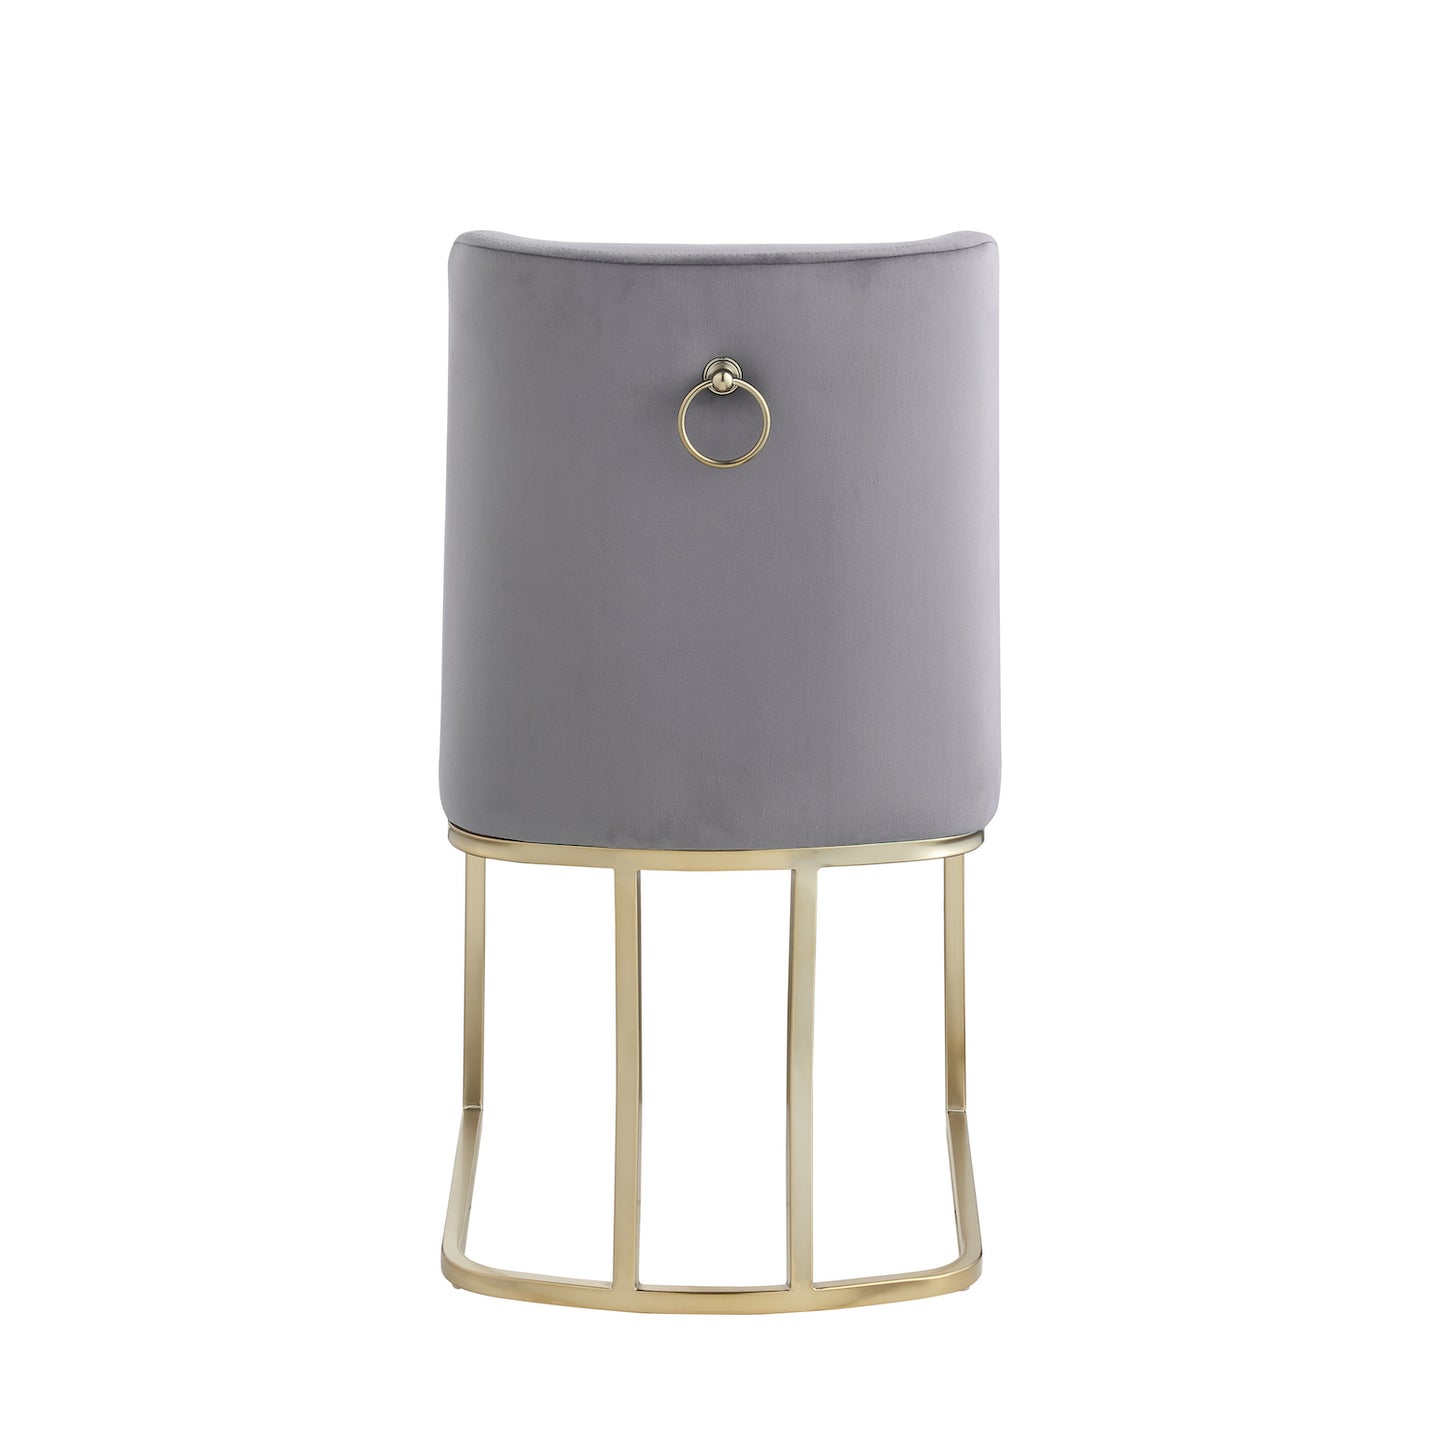 Woker Furniture Contemporary Velvet Dining Chairs Set of 2 - Gray